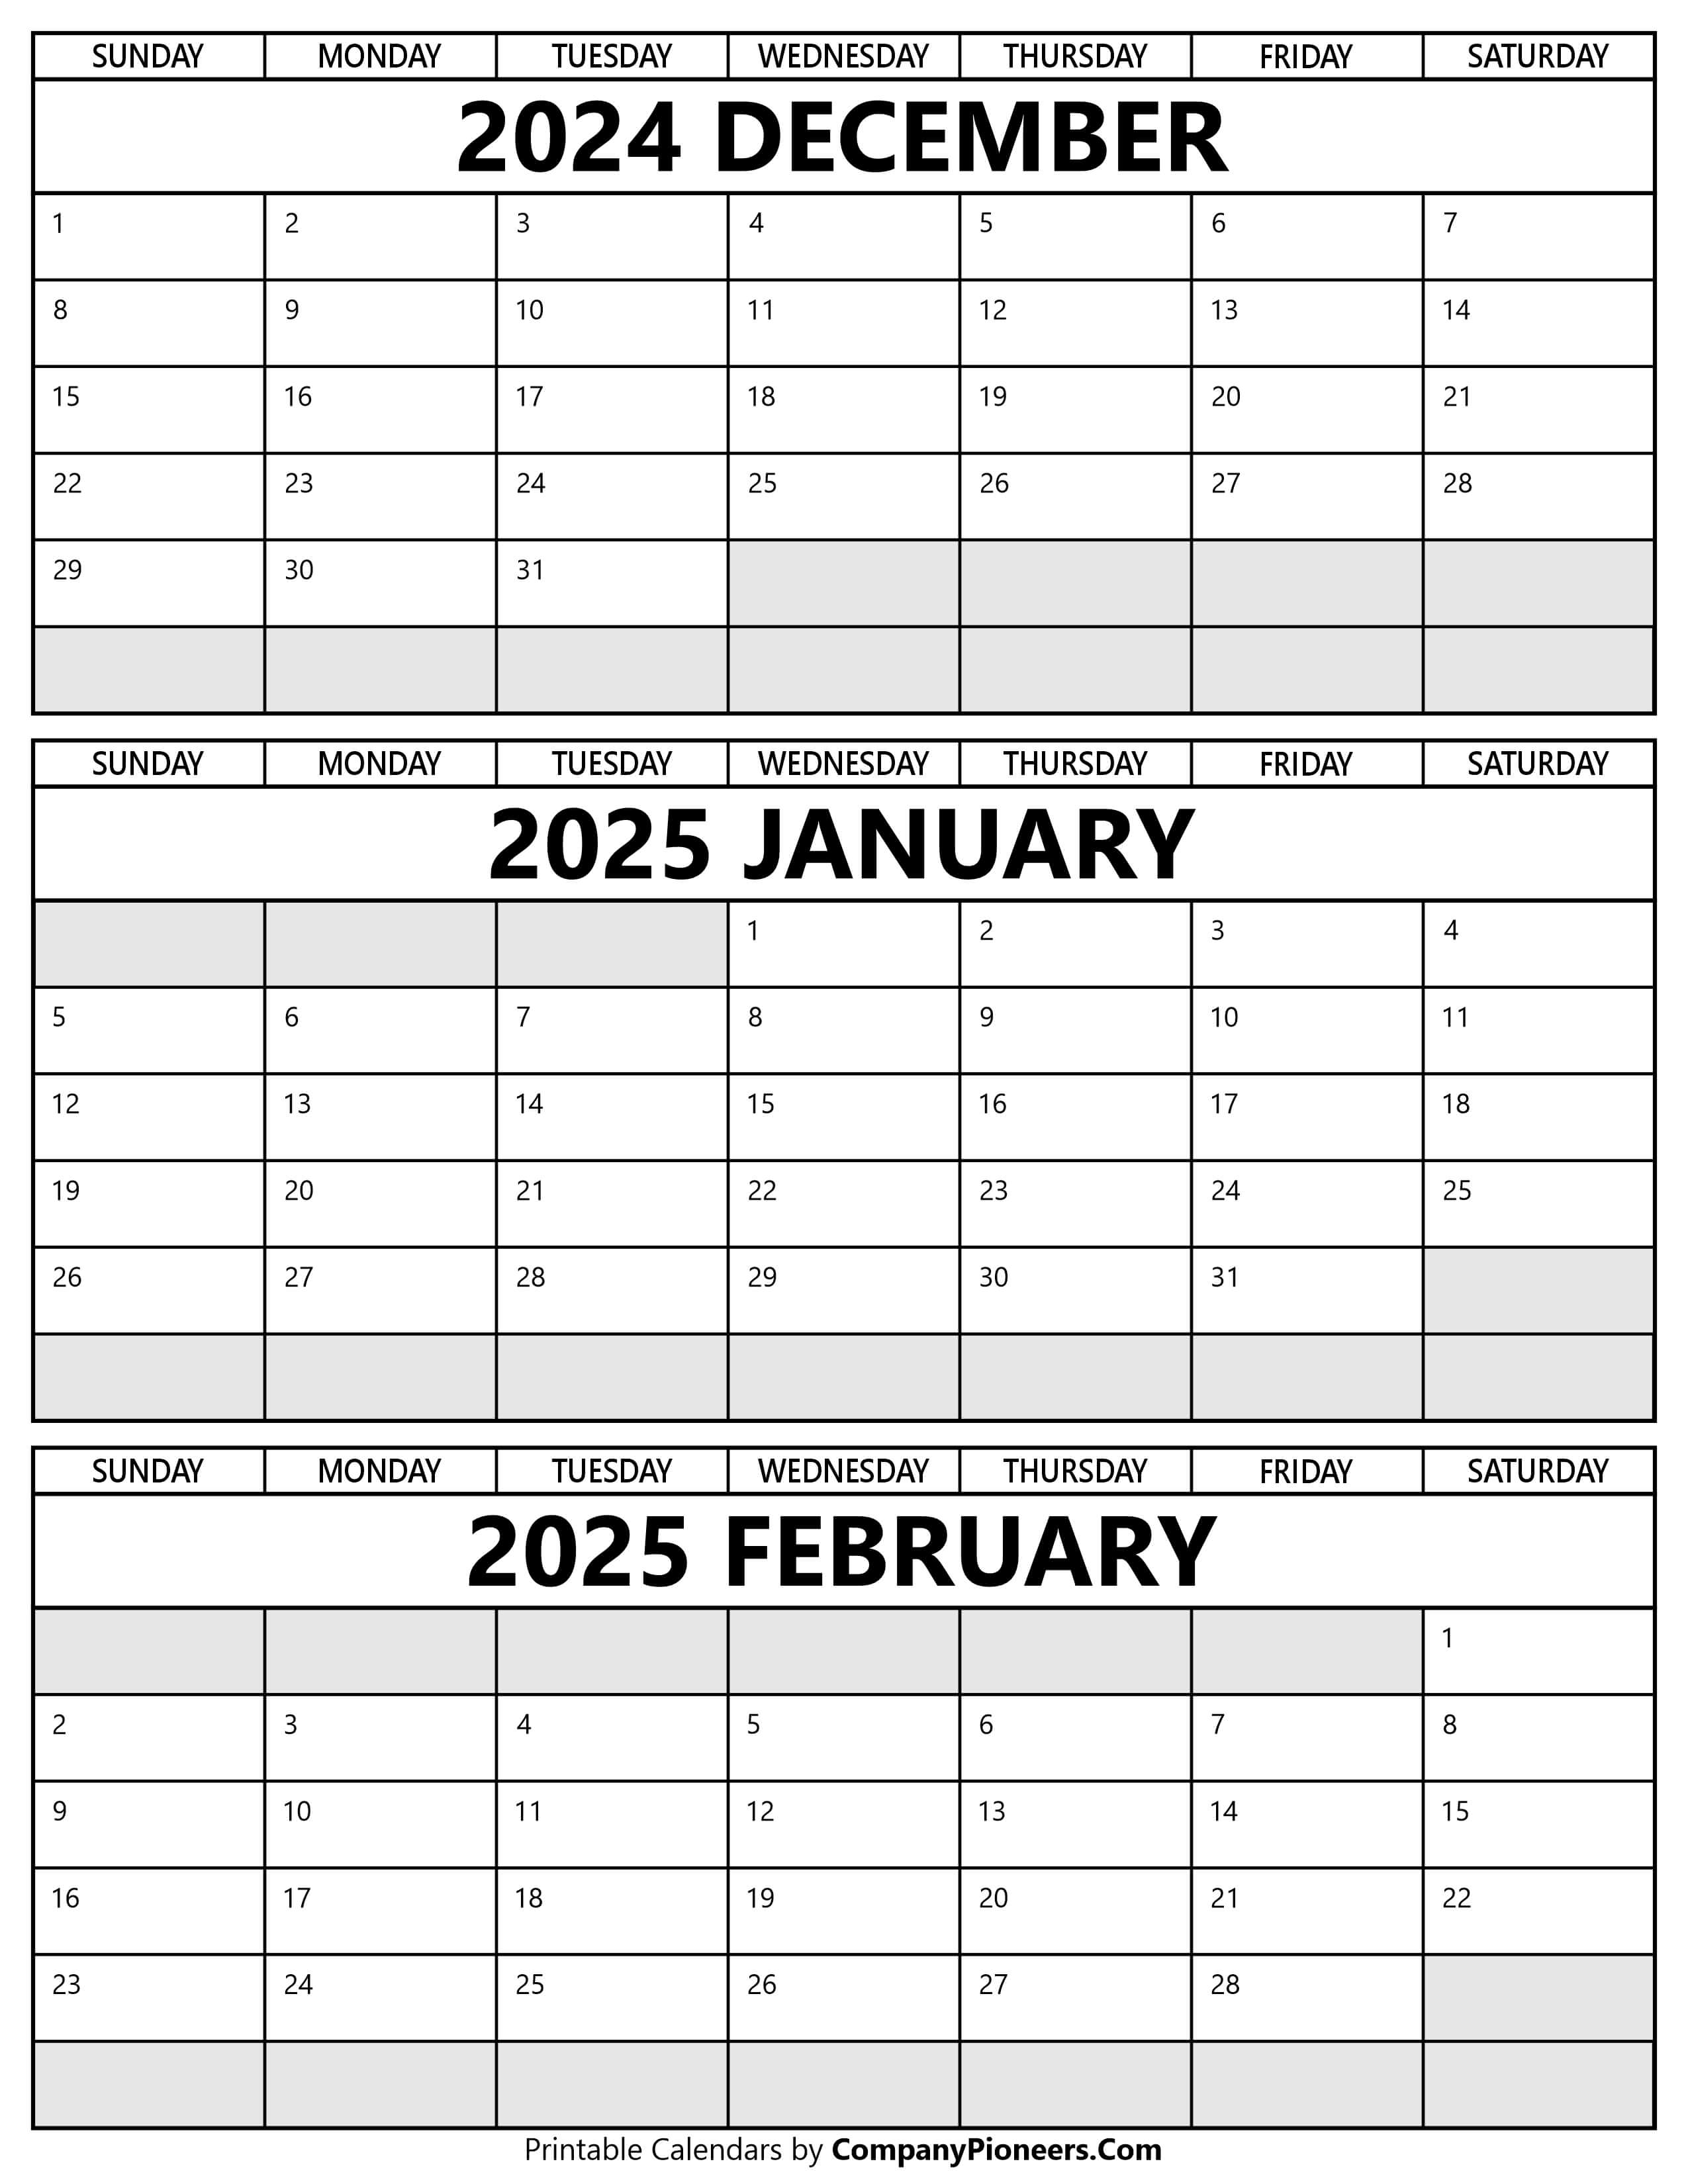 Printable December 2024 to February 2025 Calendar